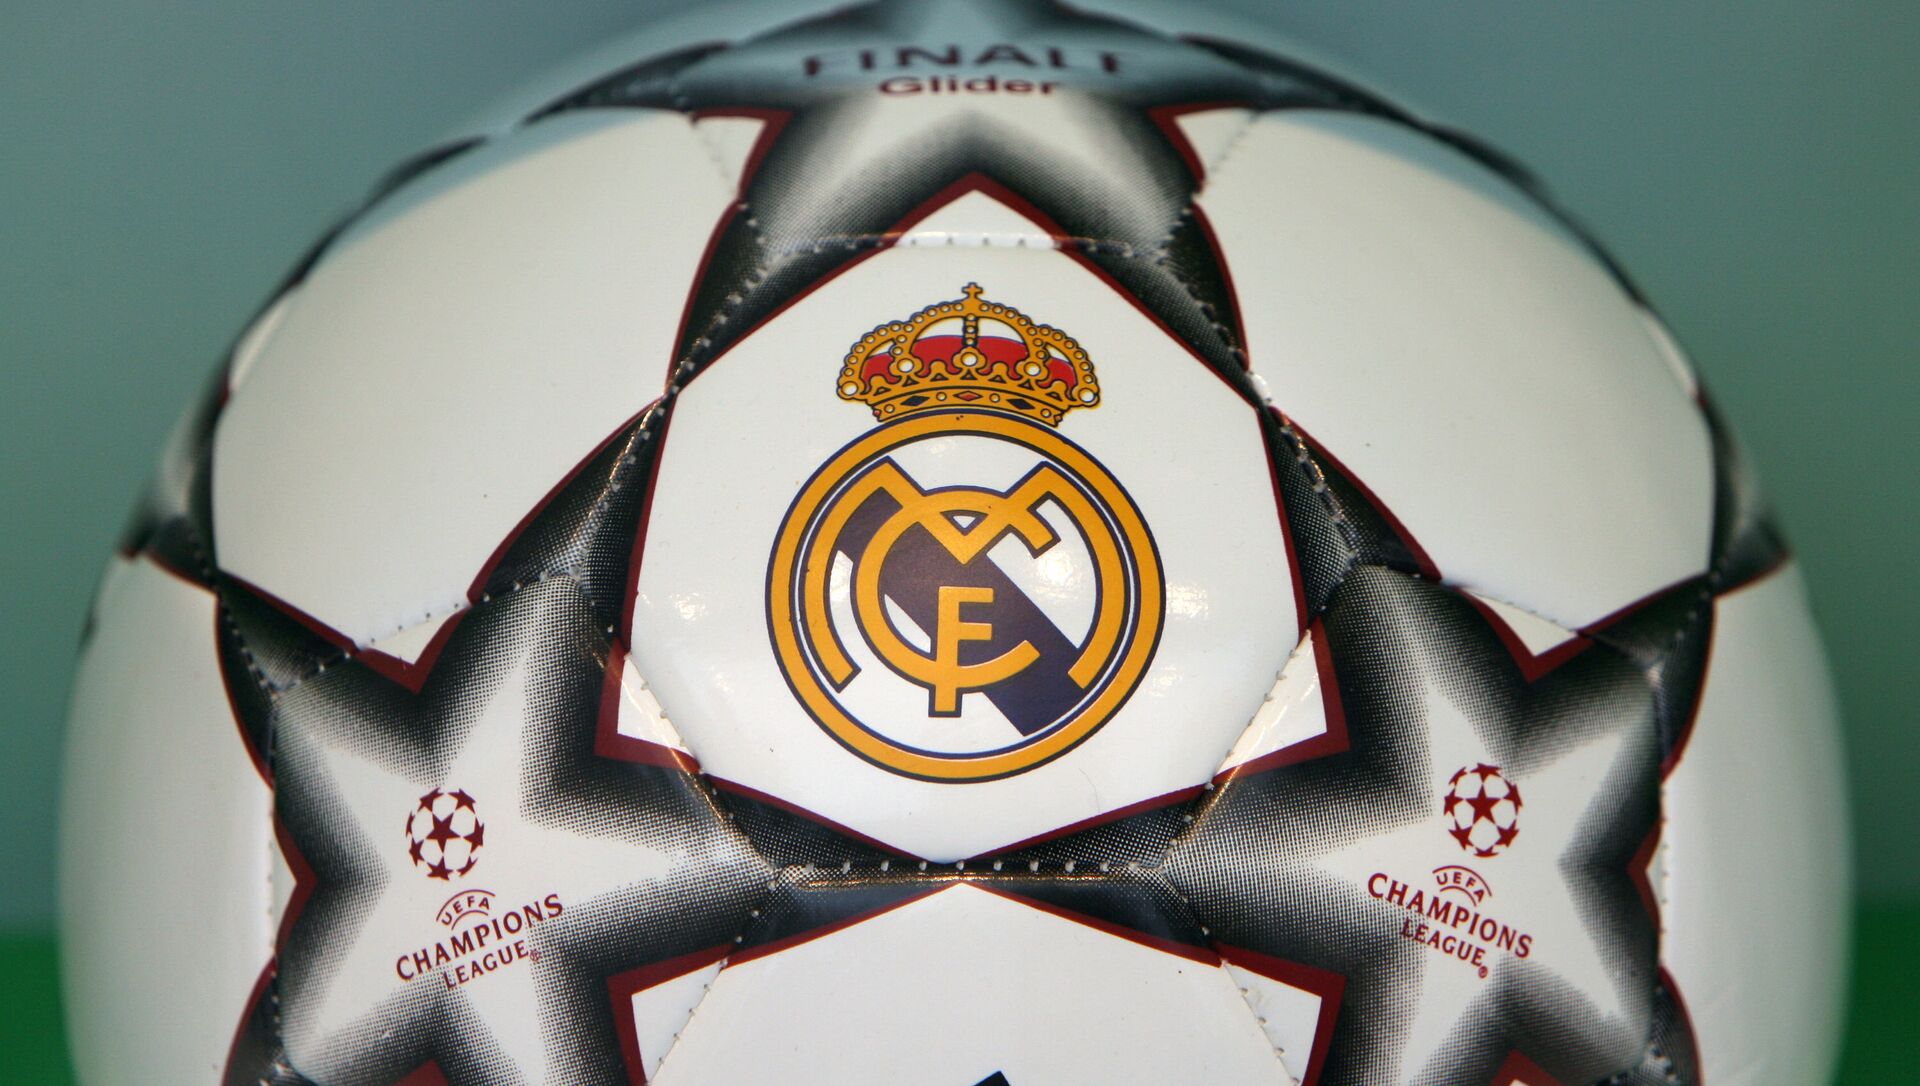 Balón de Fútbol Histórico Real Madrid 1902 - Real Madrid CF